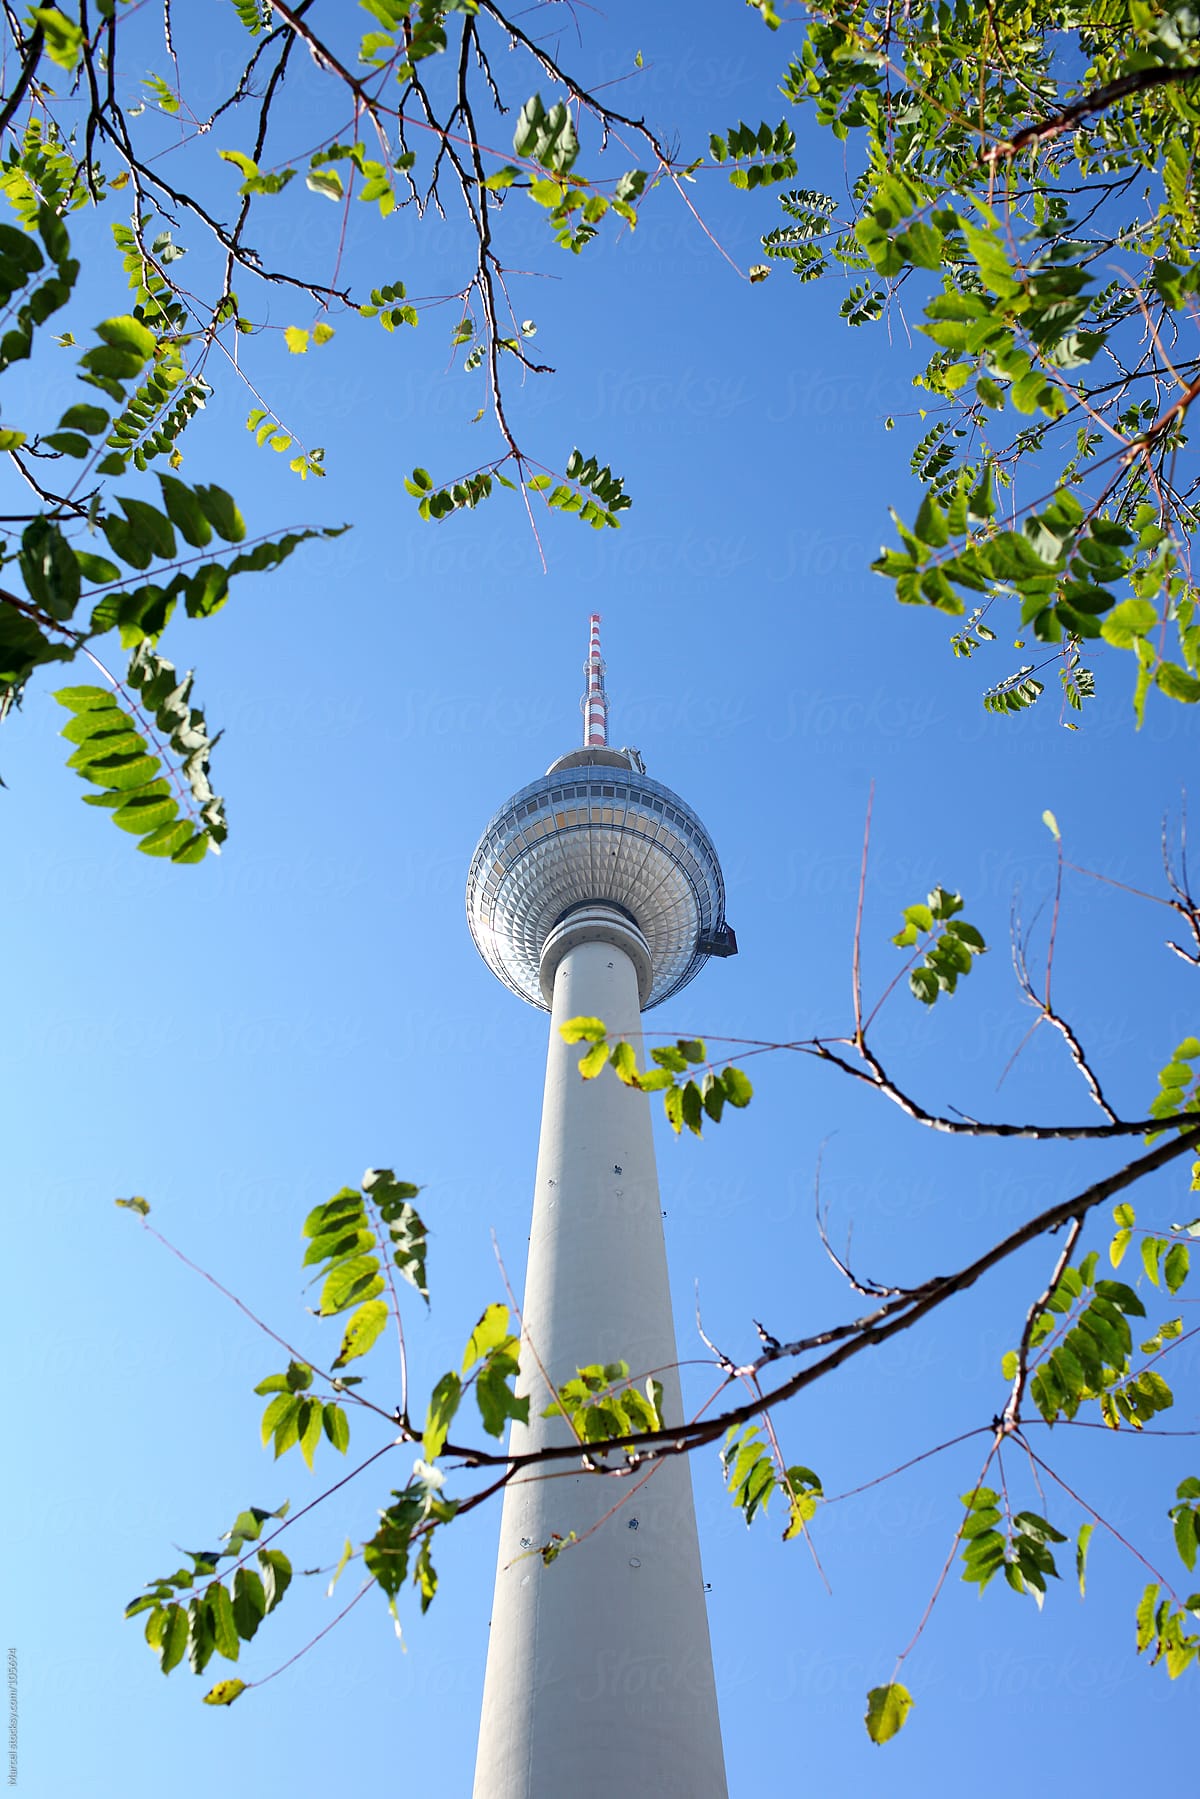 Television tower (Fernsehturm) in Berlin